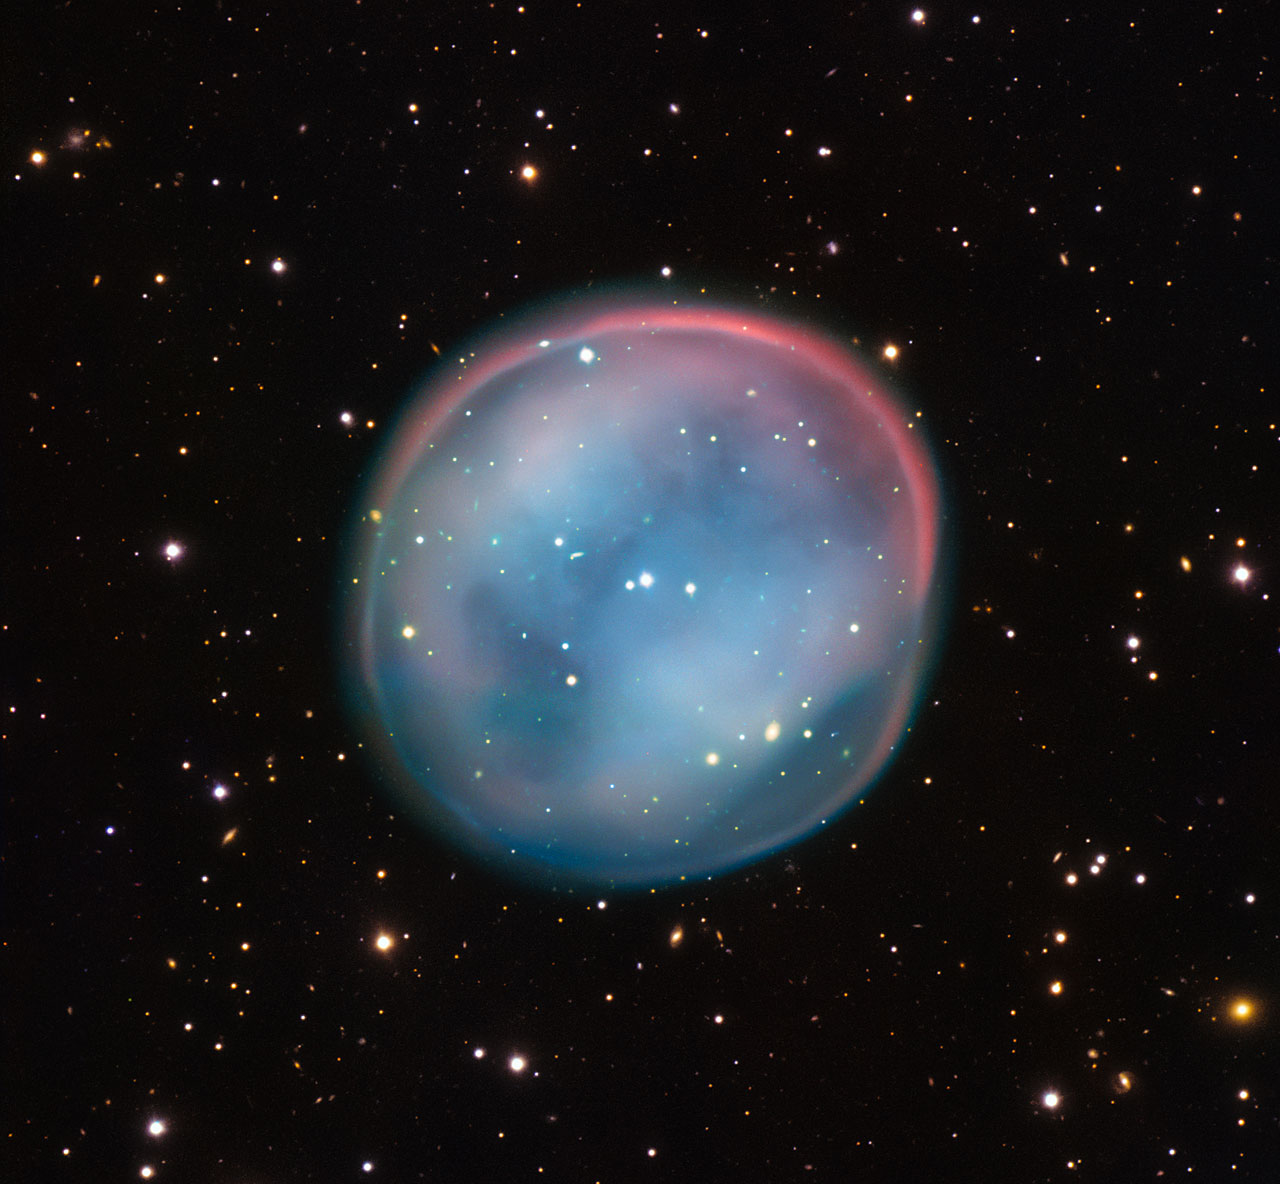 The planetary nebula ESO 378-1